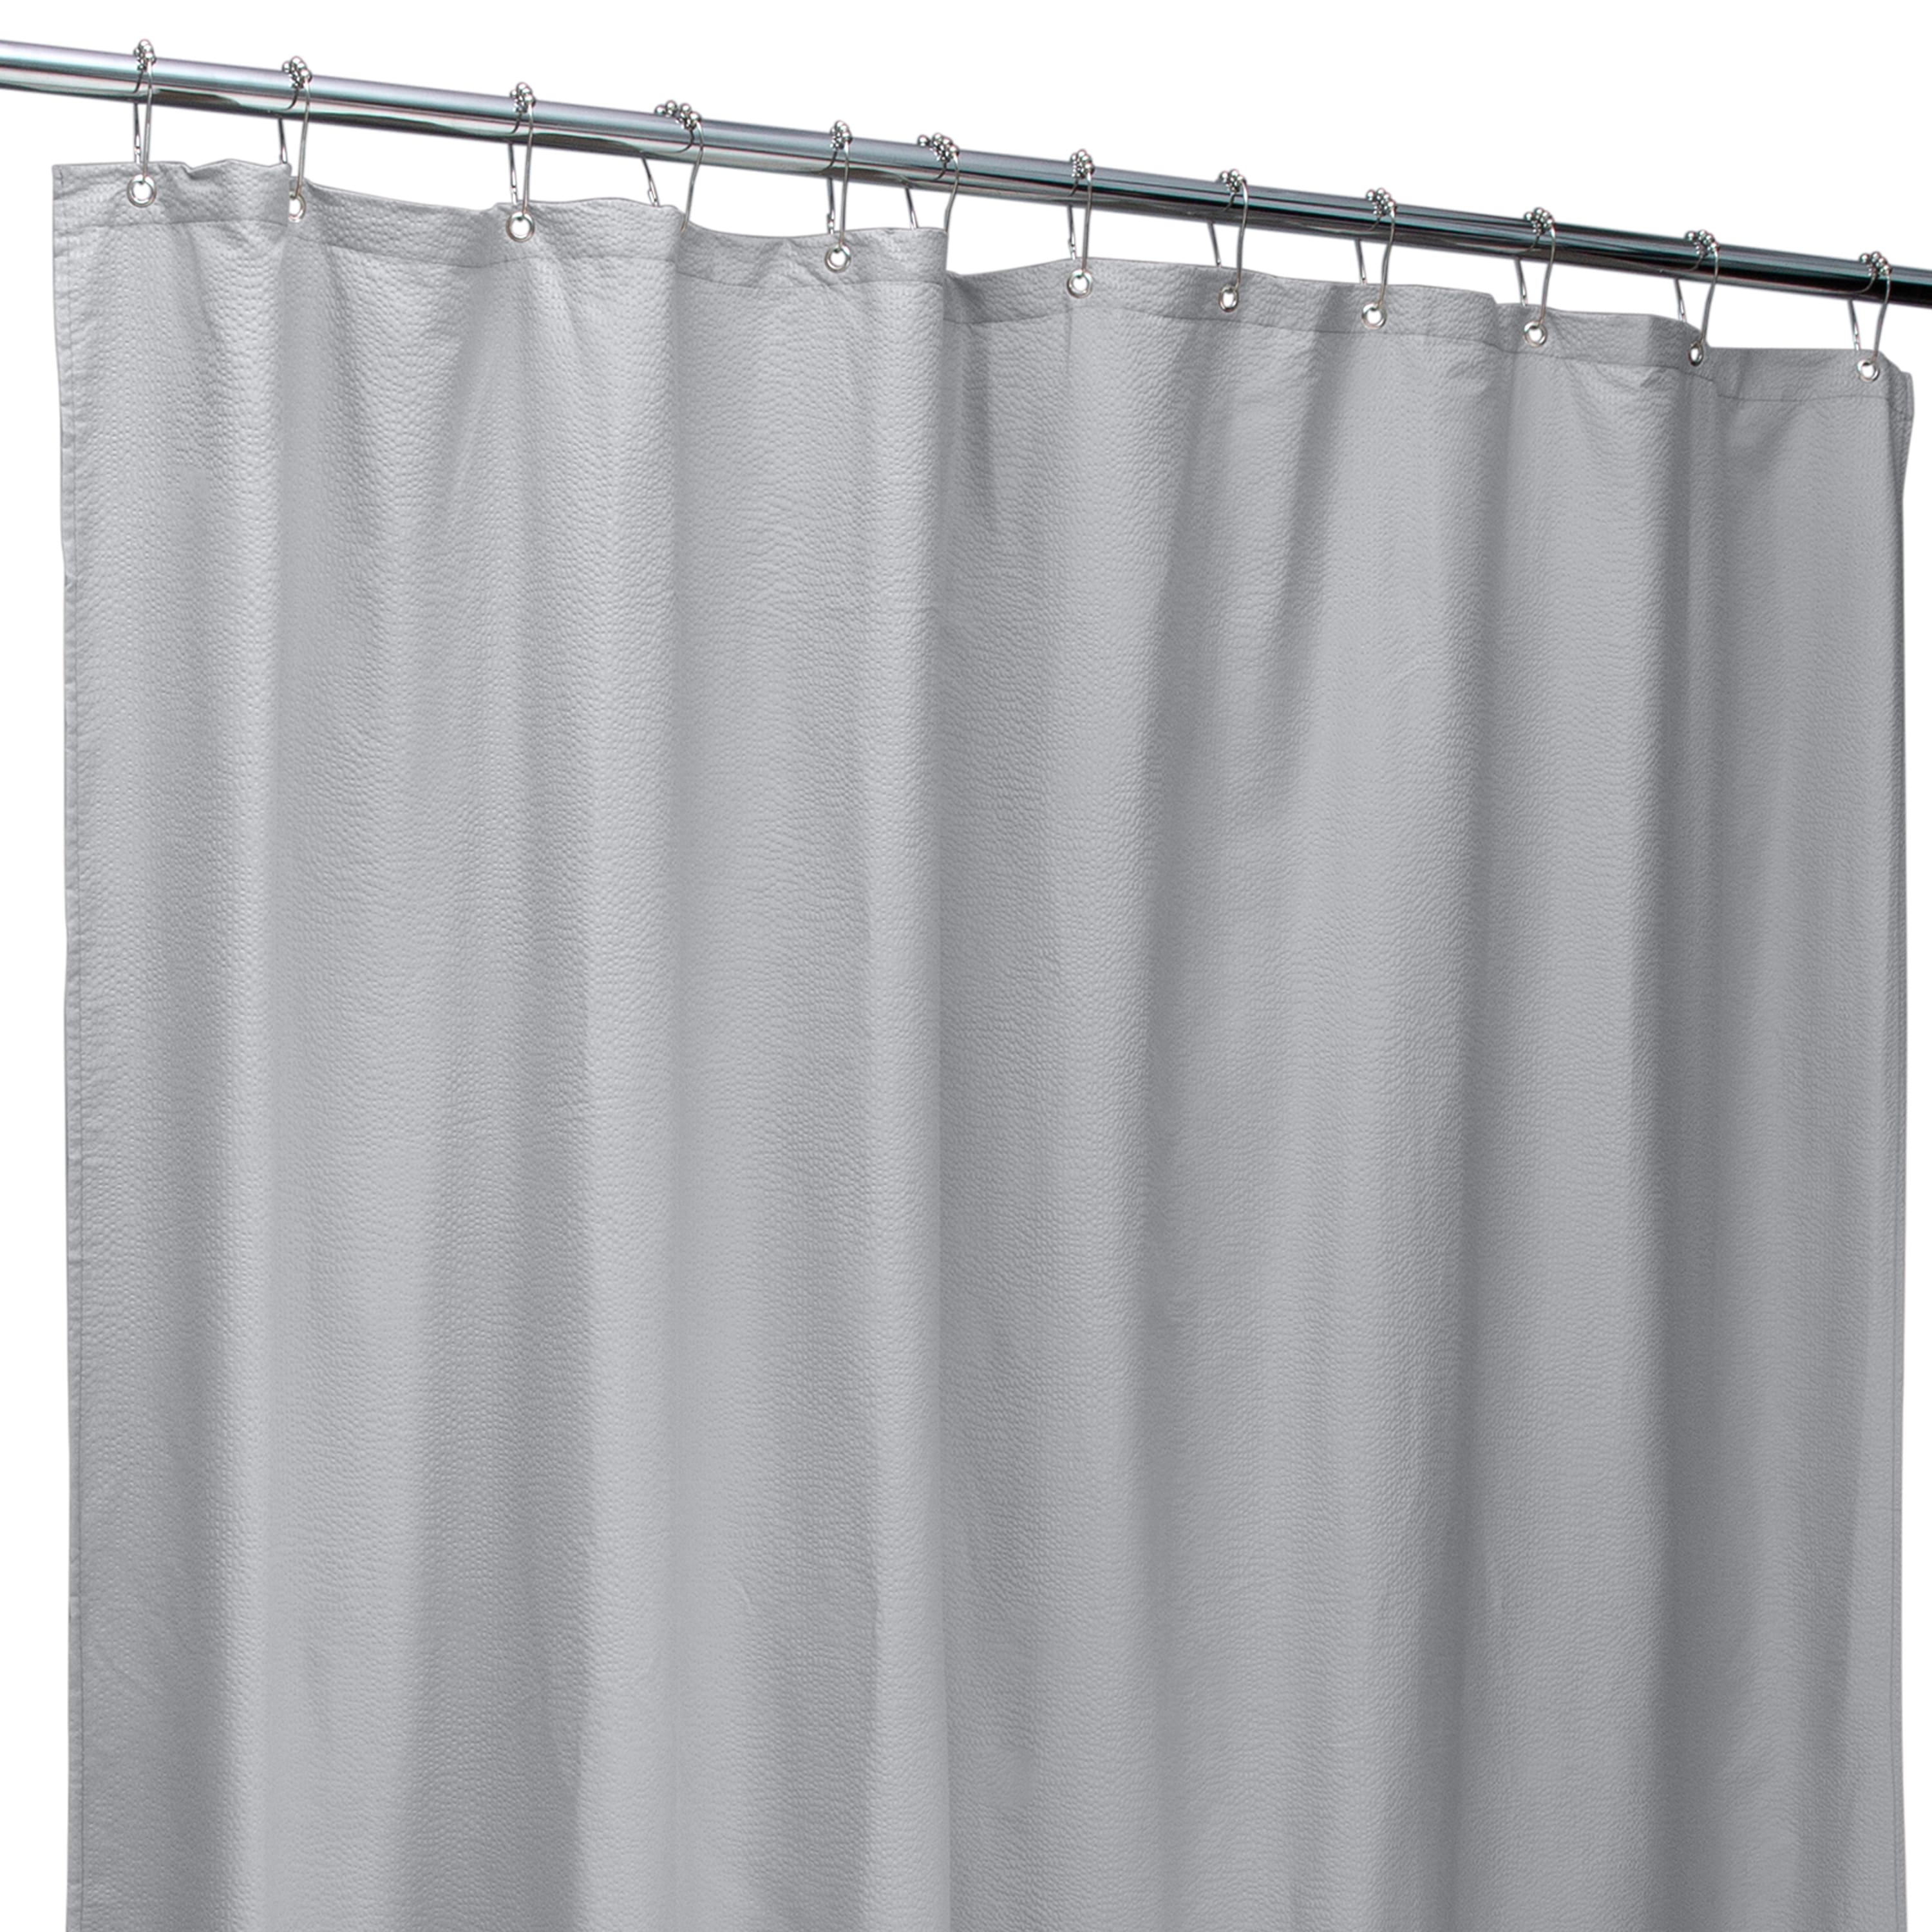 Bath Bliss Silver Microfiber Soft Touch Seersucker Design Shower Curtain Liner